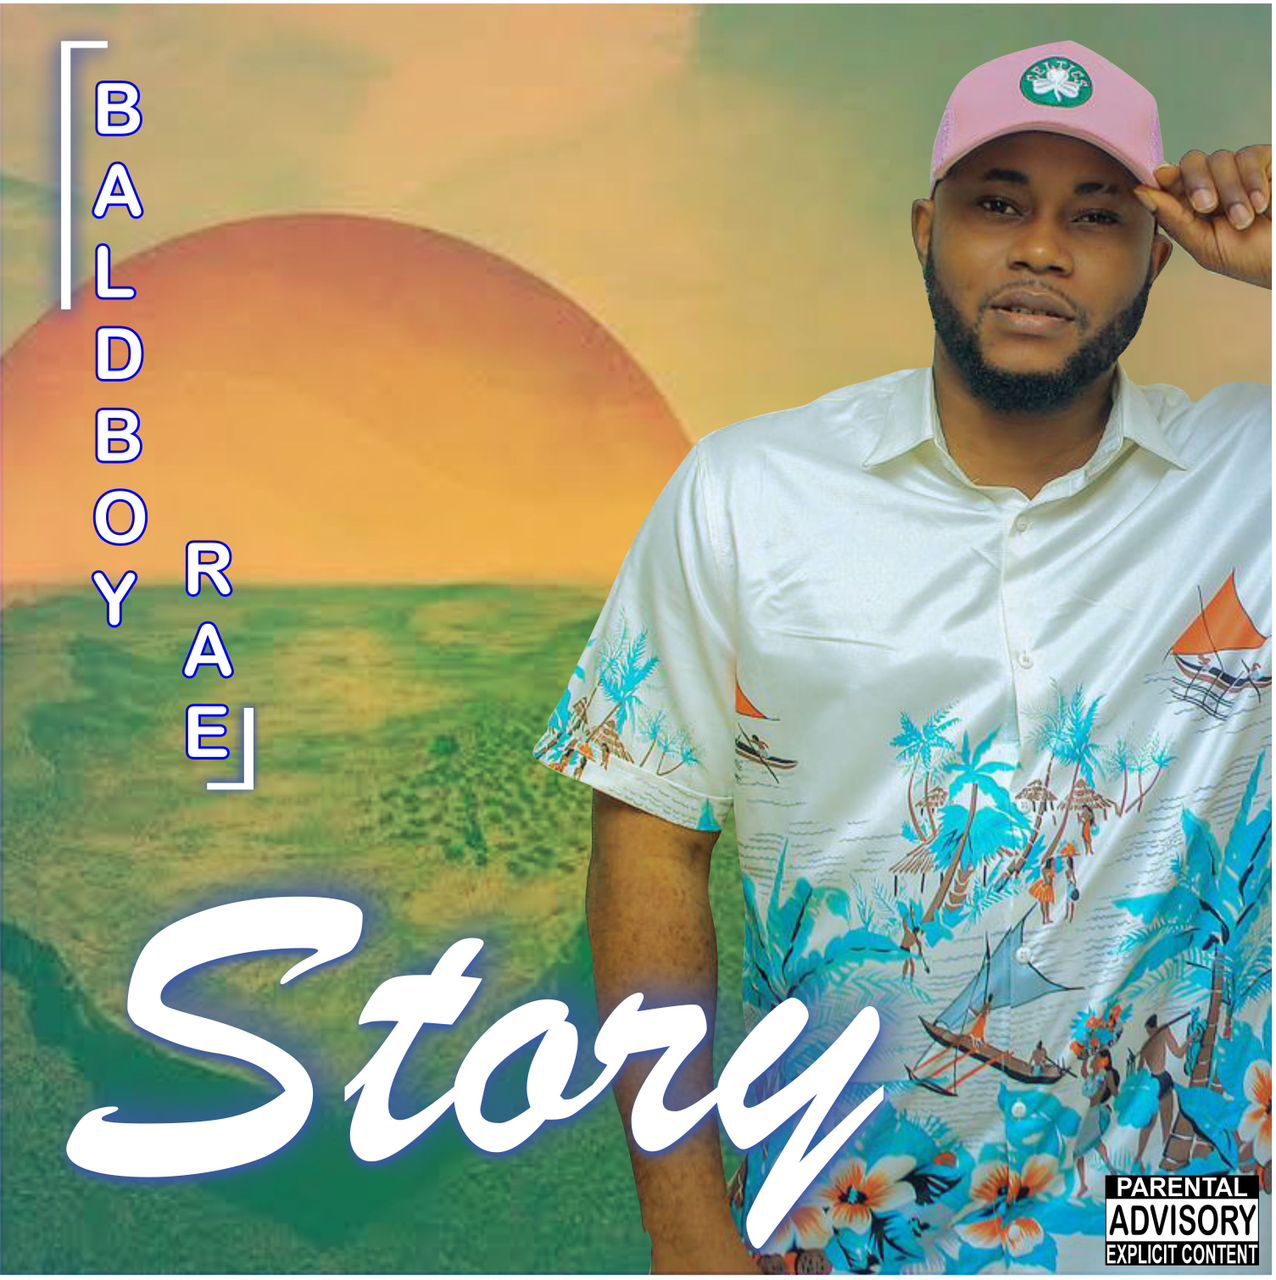 BaldBoy Rae Story